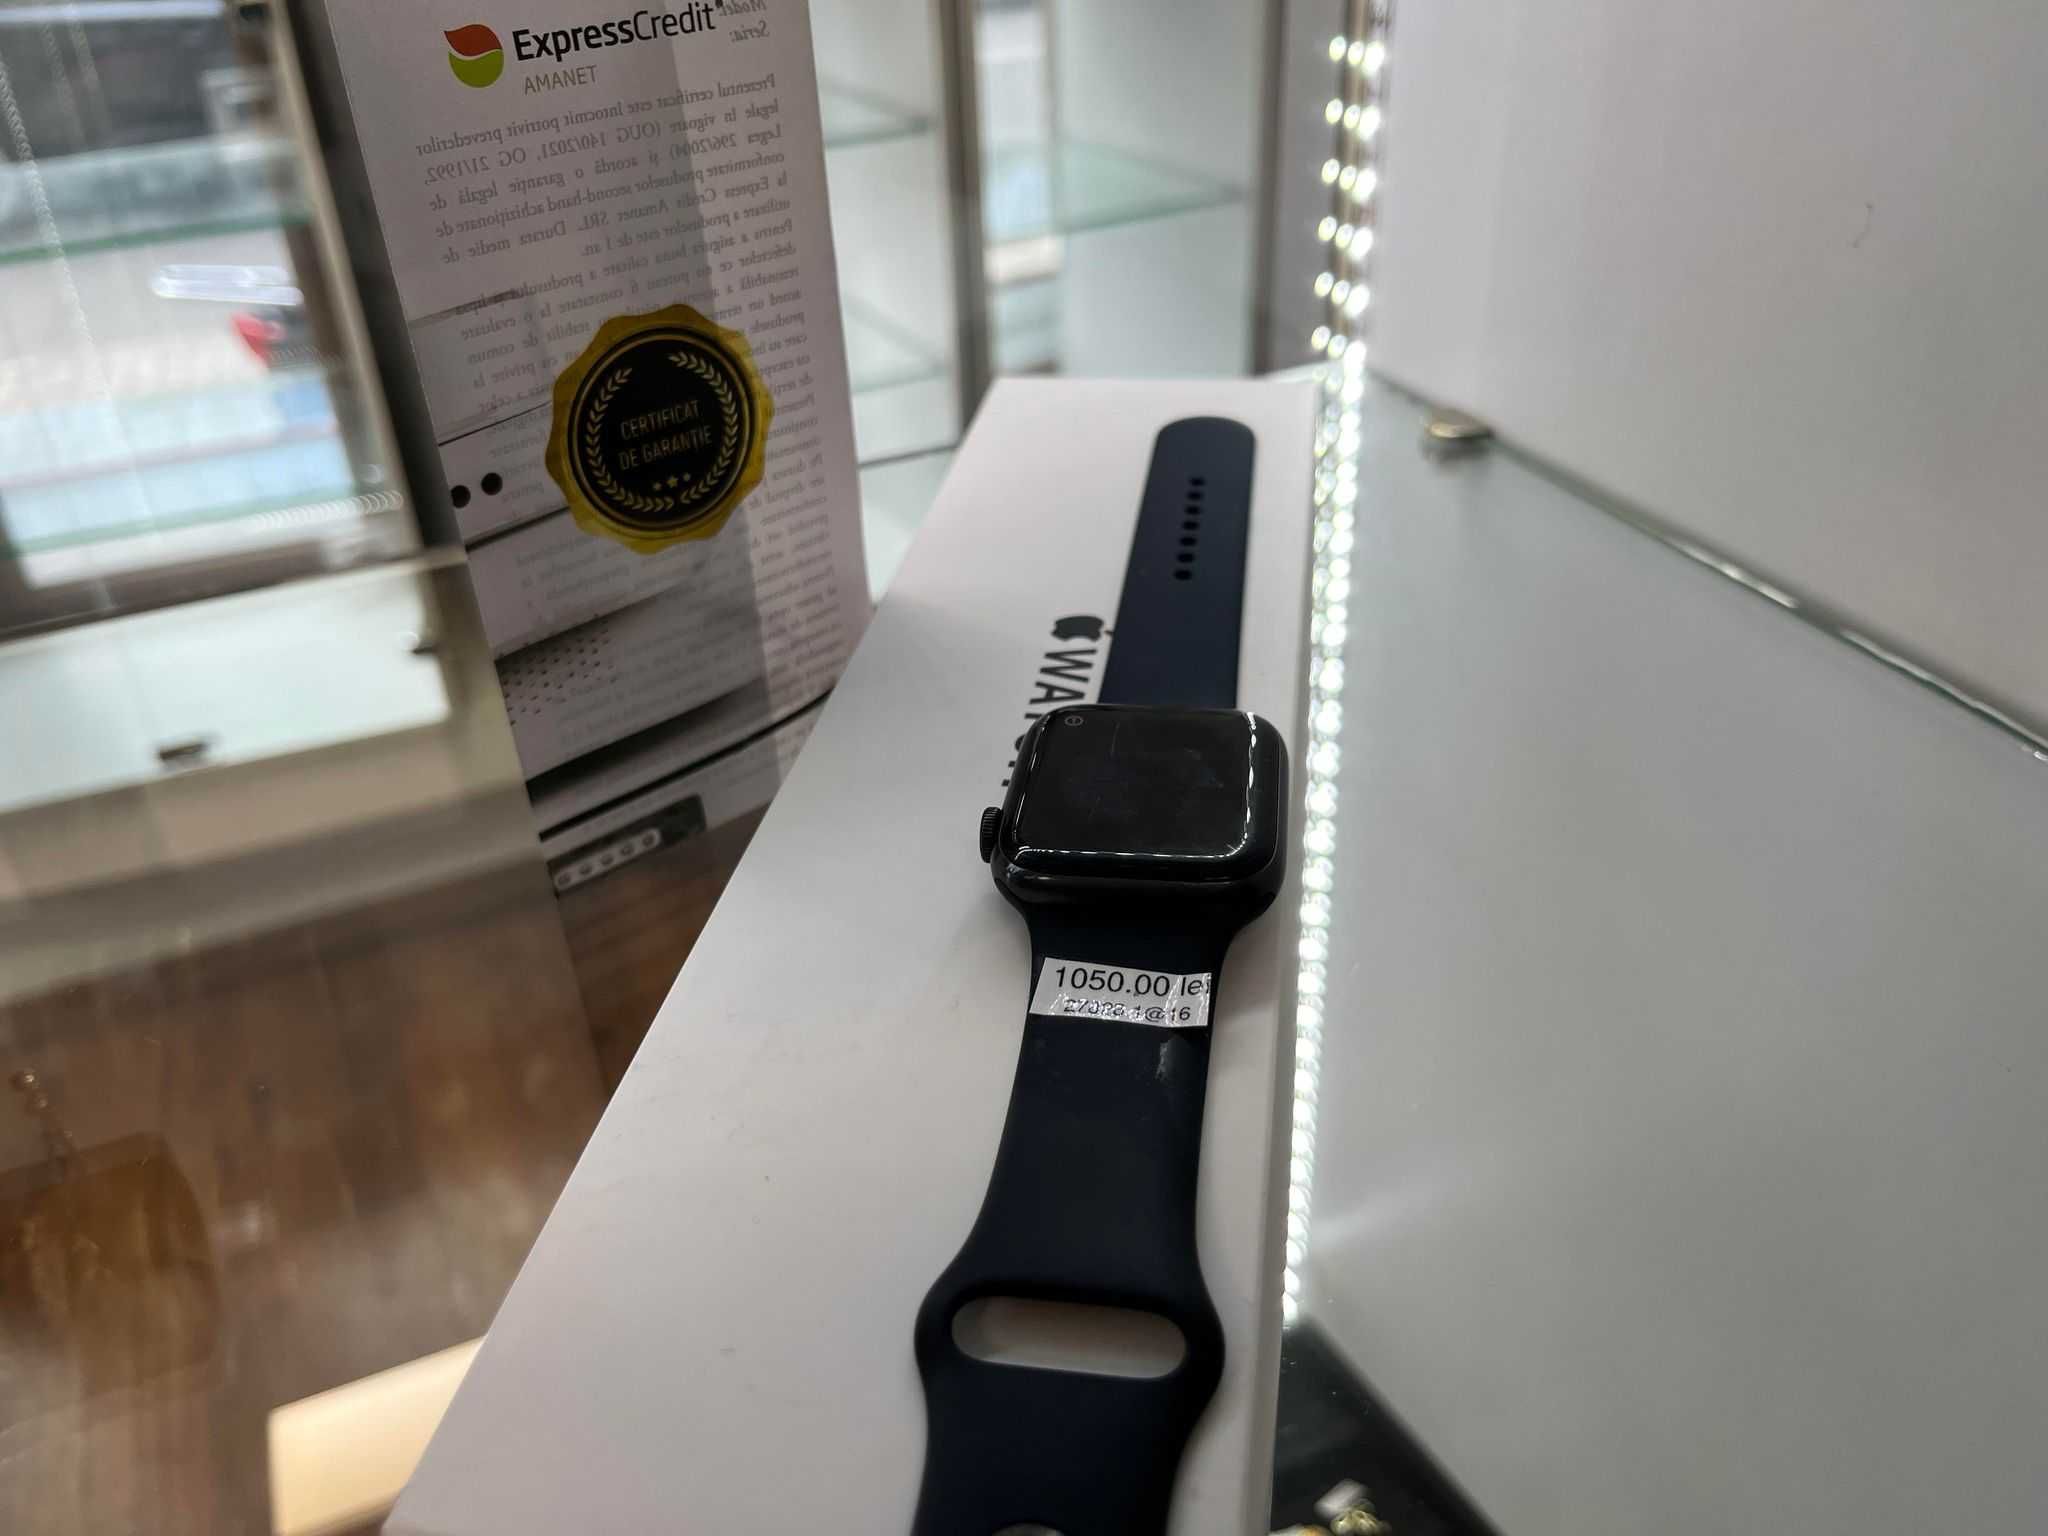 Apple Watch SE 2020 (AG16 Moldova b27828)